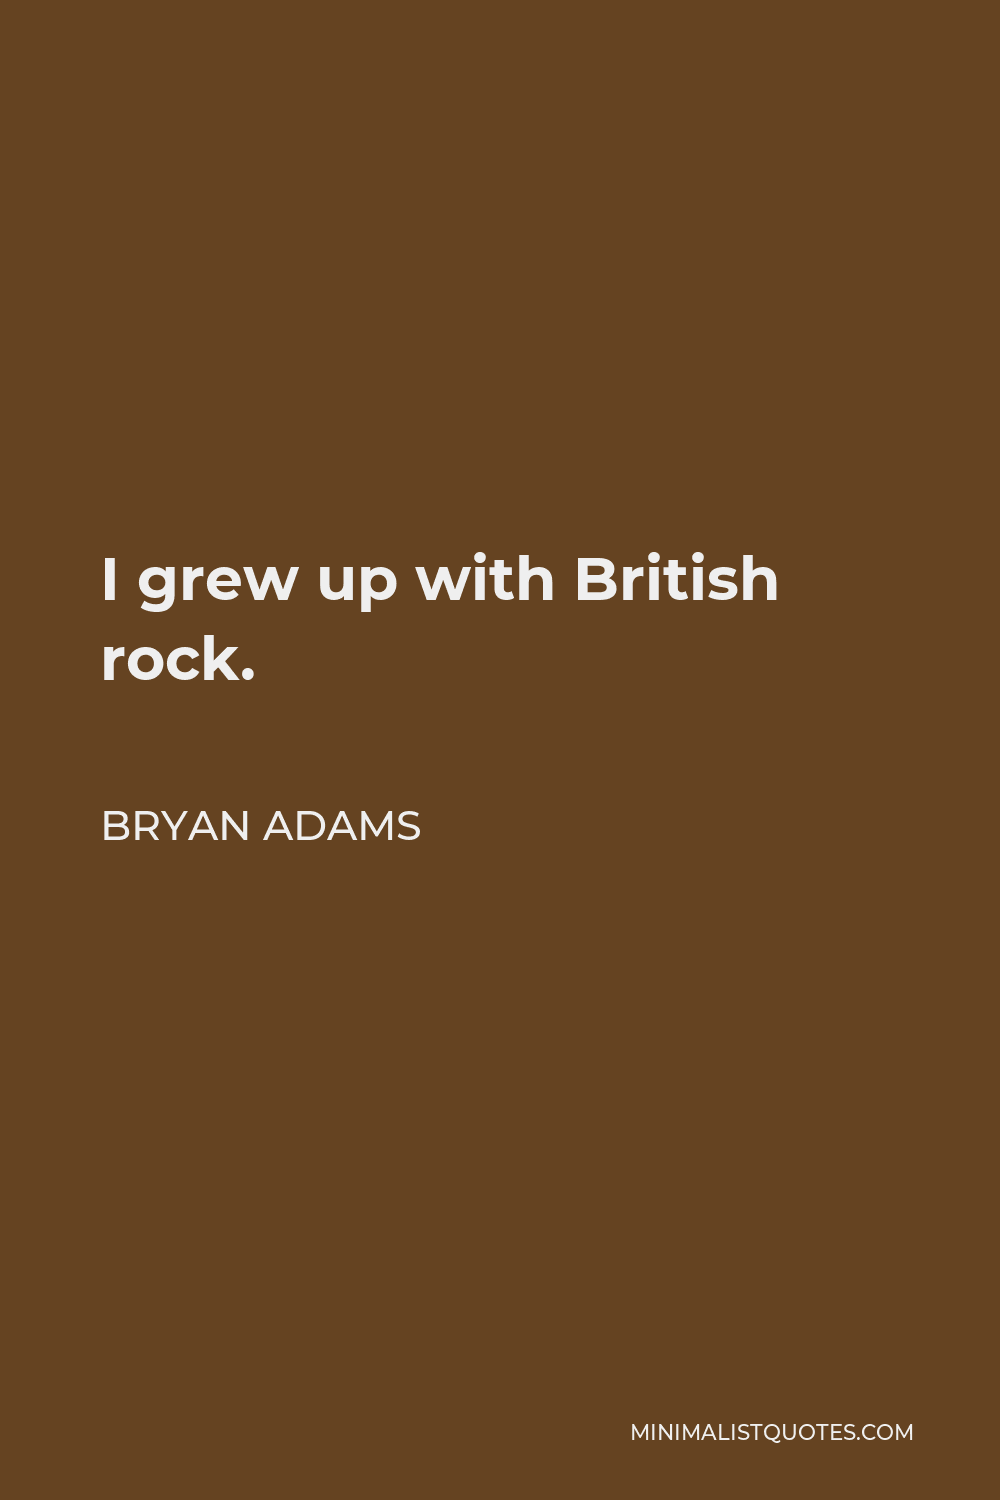 Bryan Adams Quote - I grew up with British rock.